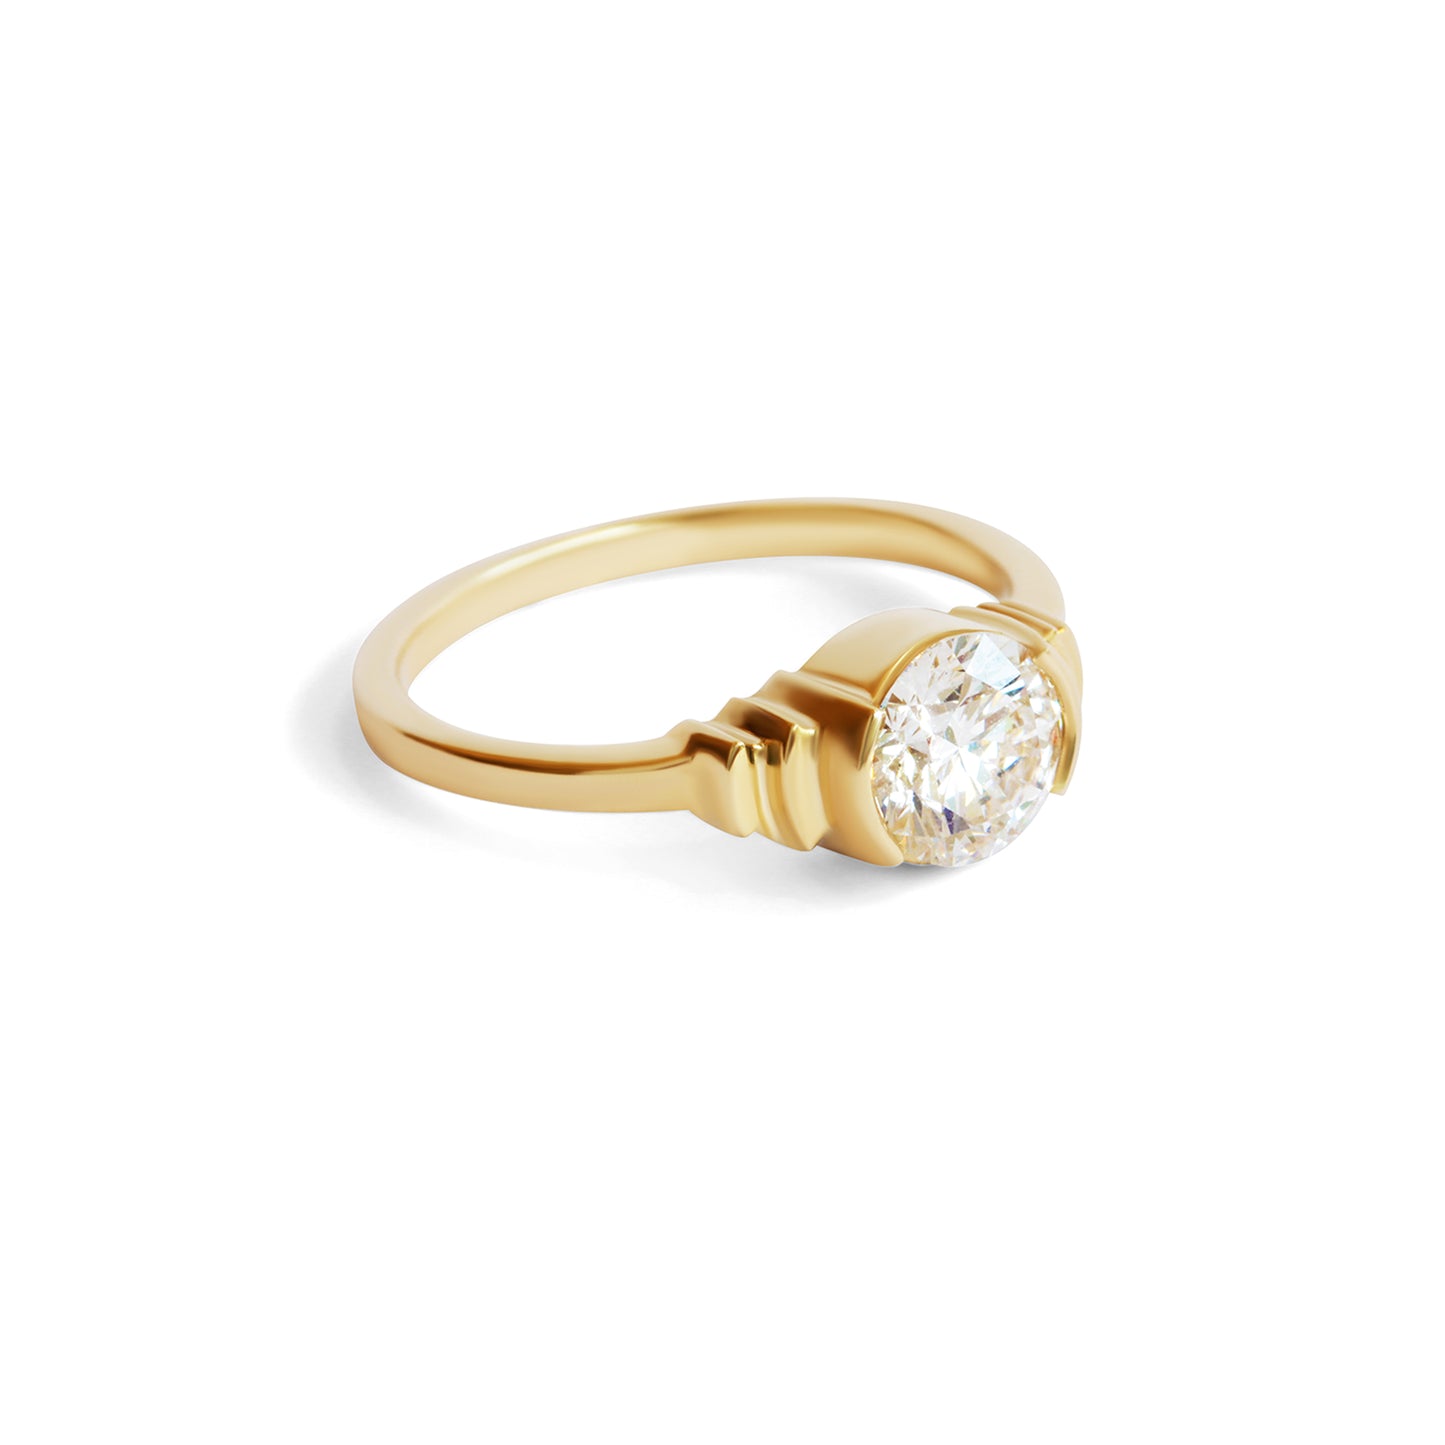 Step Ring / Lab Round Diamonds 1.10ct - Goldpoint Studio - Greenpoint, Brooklyn - Fine Jewelry